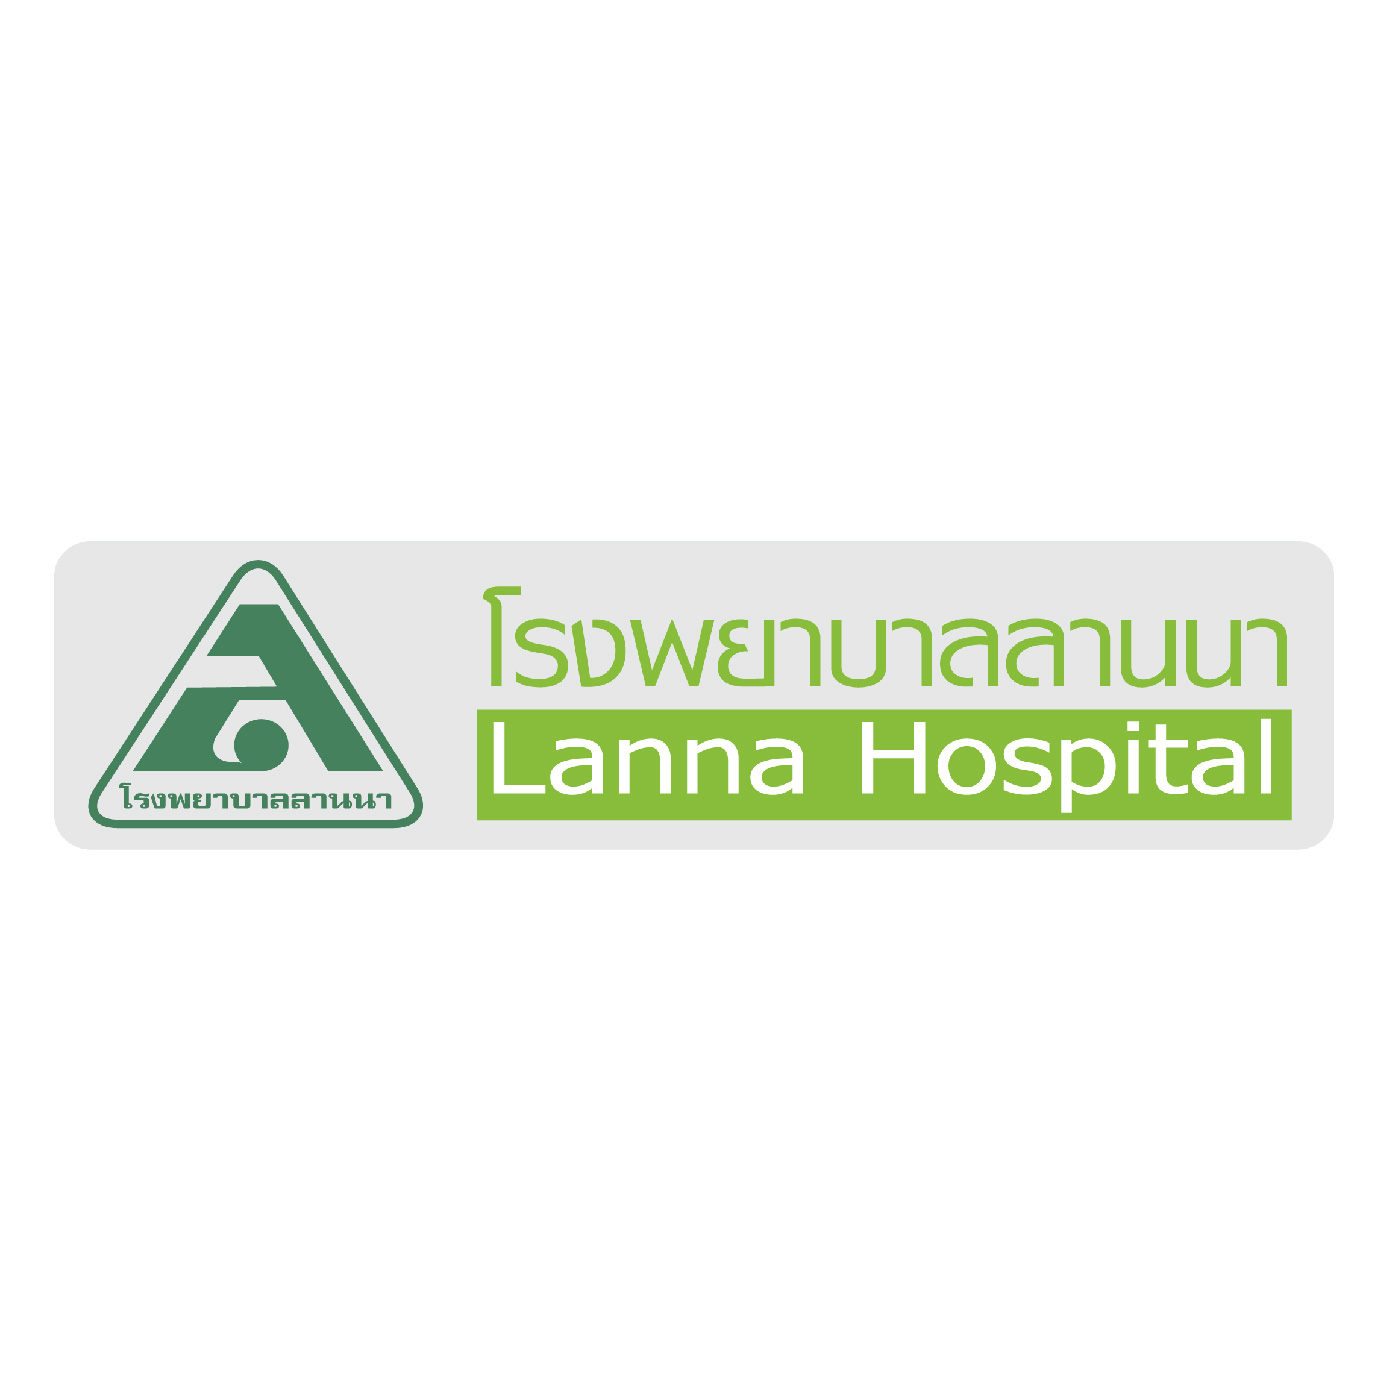 Lanna Hospital 01